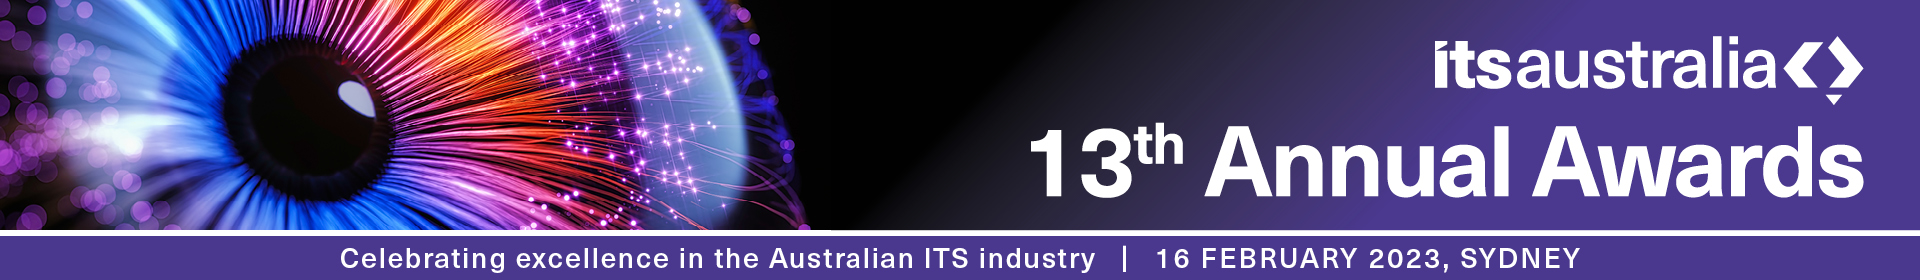 13th ITS Australia Awards